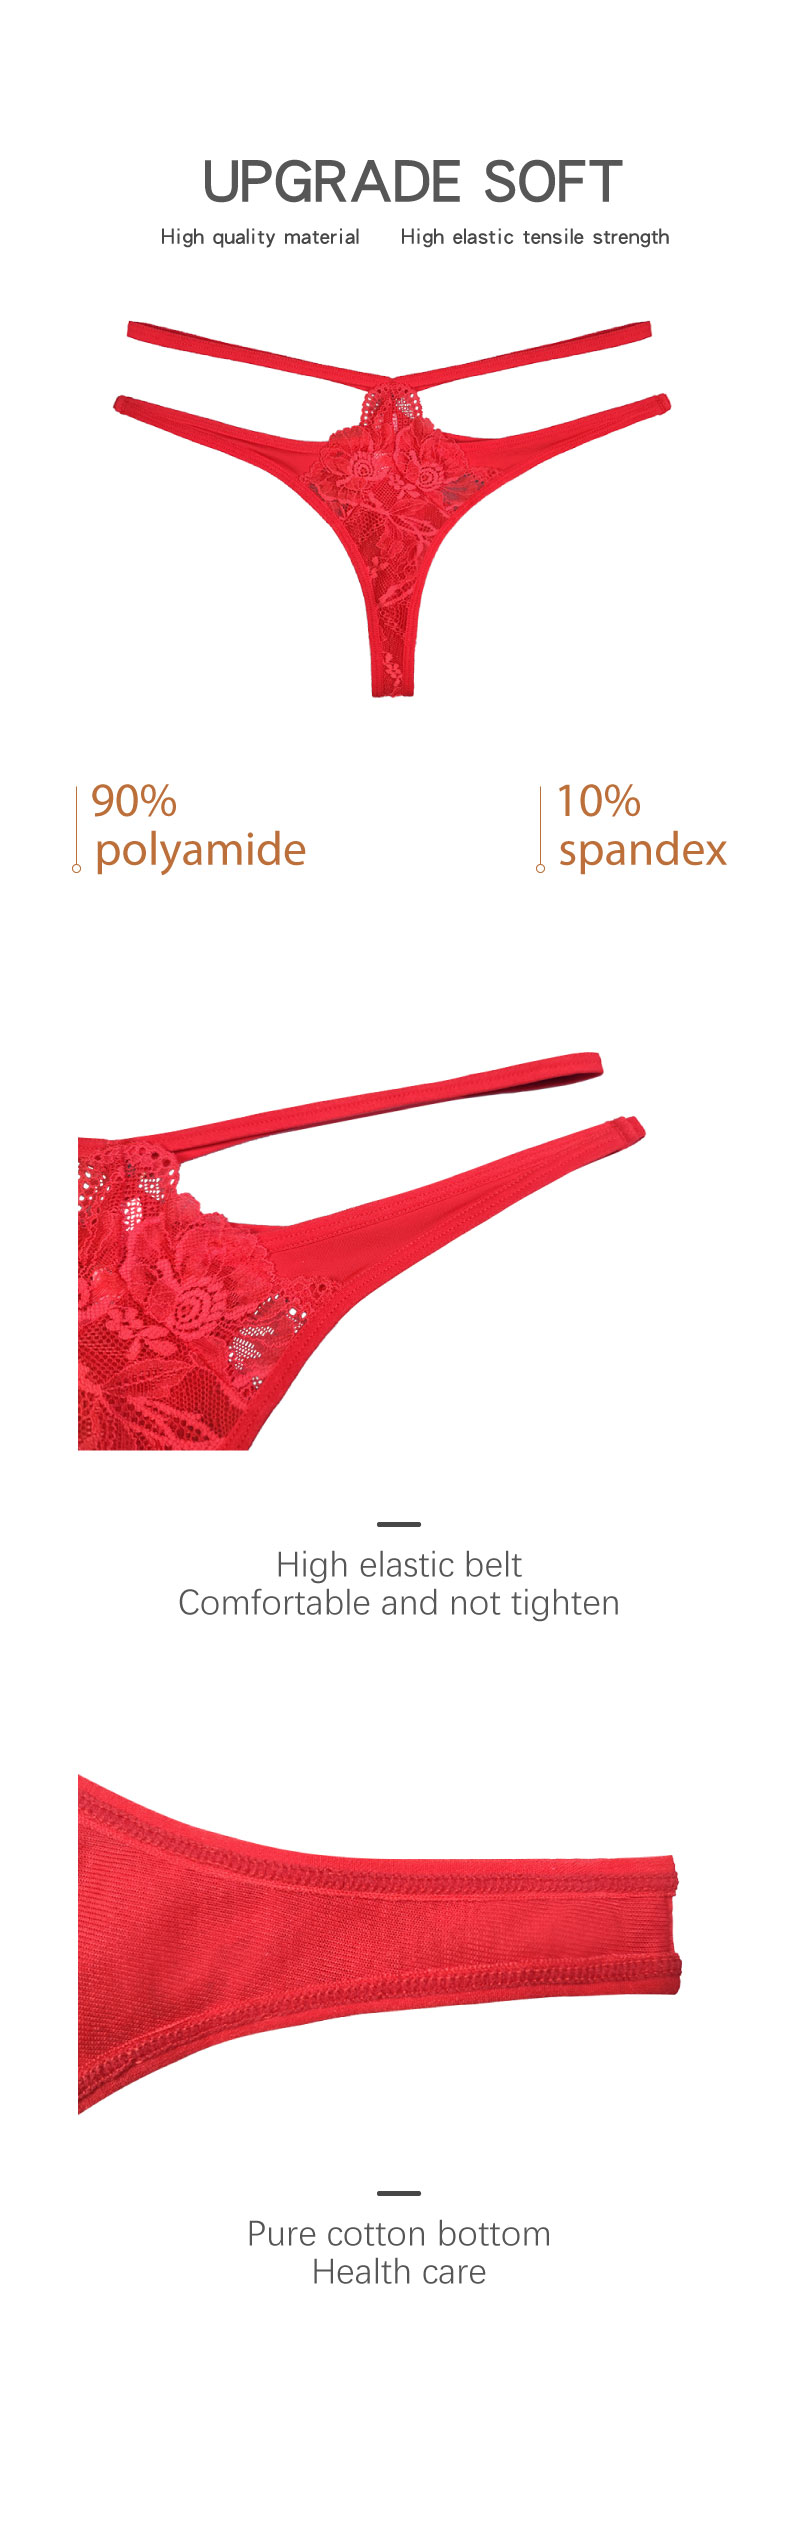 red lace underwear